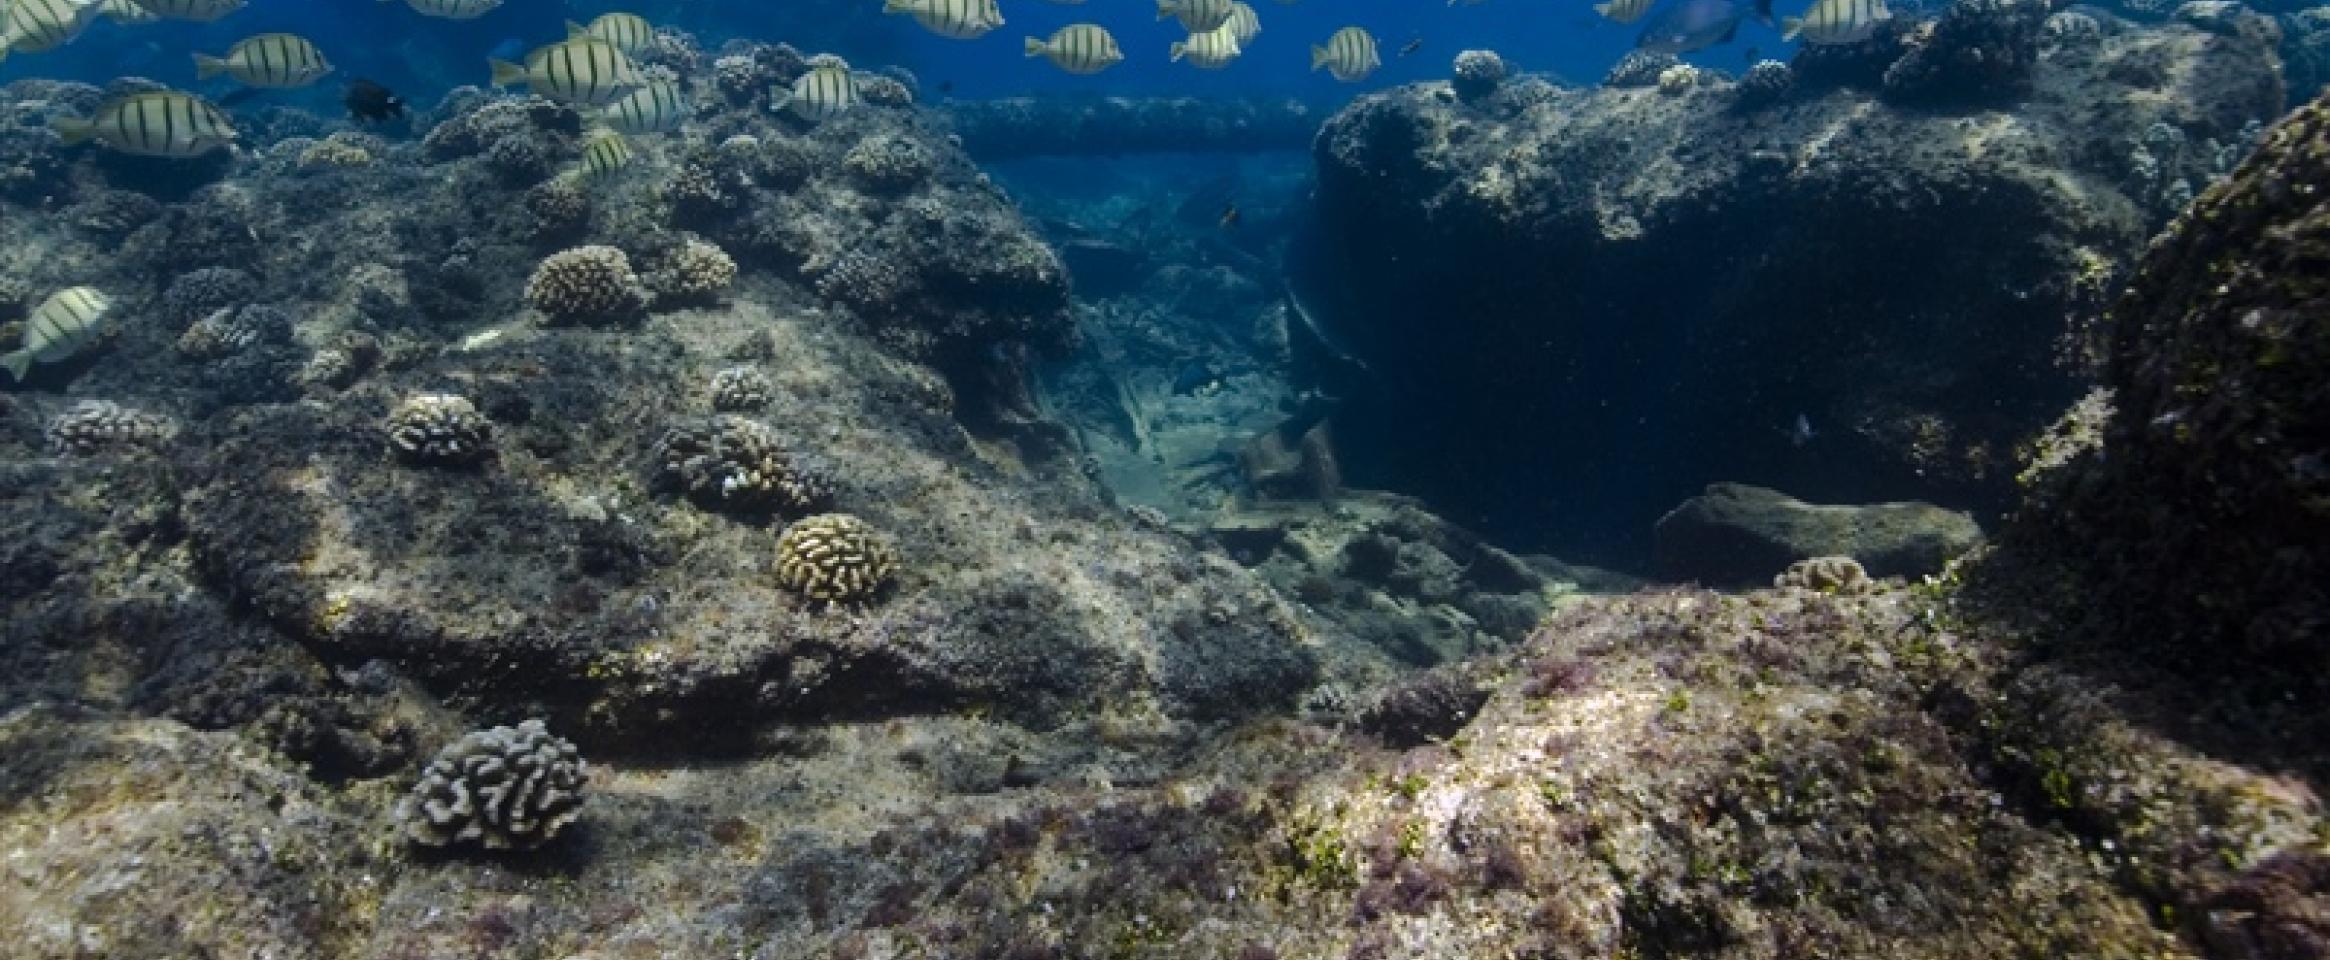 Top Fish swim in a sanctuary near Papahānaumokuākea Marine National Monument, Hawaii. Credit: NOAA